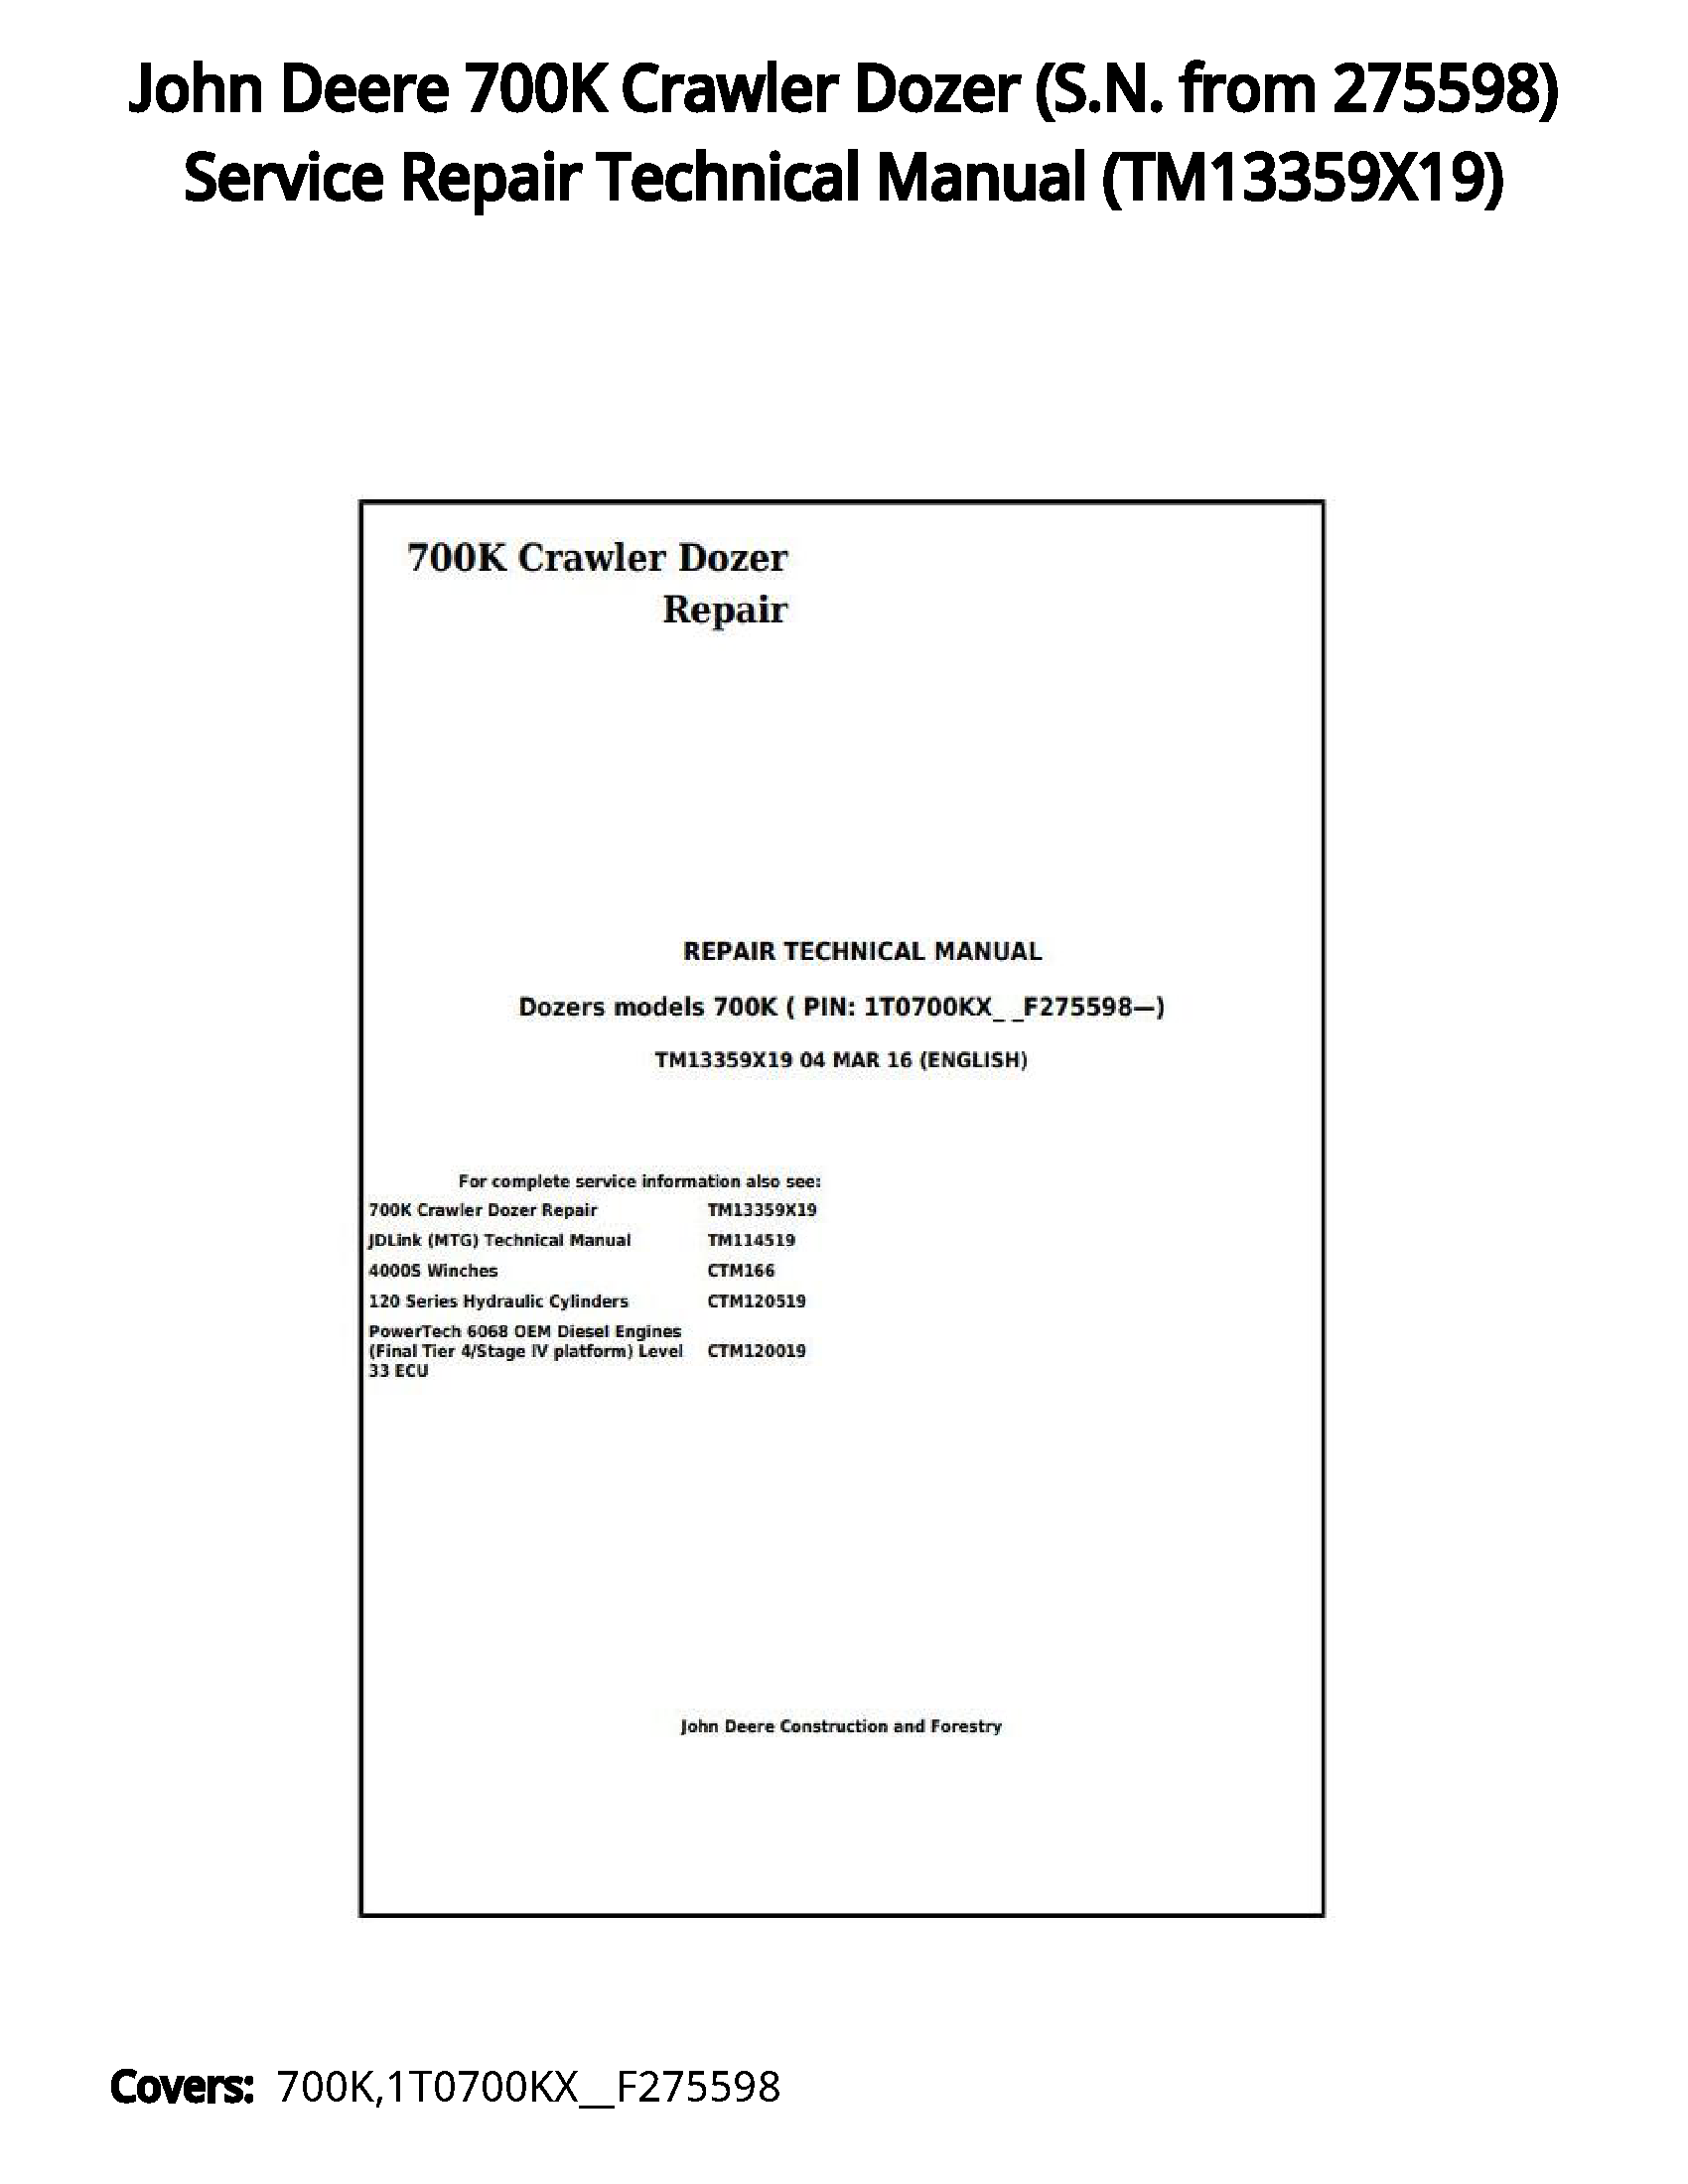 John Deere 700K Crawler Dozer (S.N. from 275598) Service Repair Technical Manual - TM13359X19